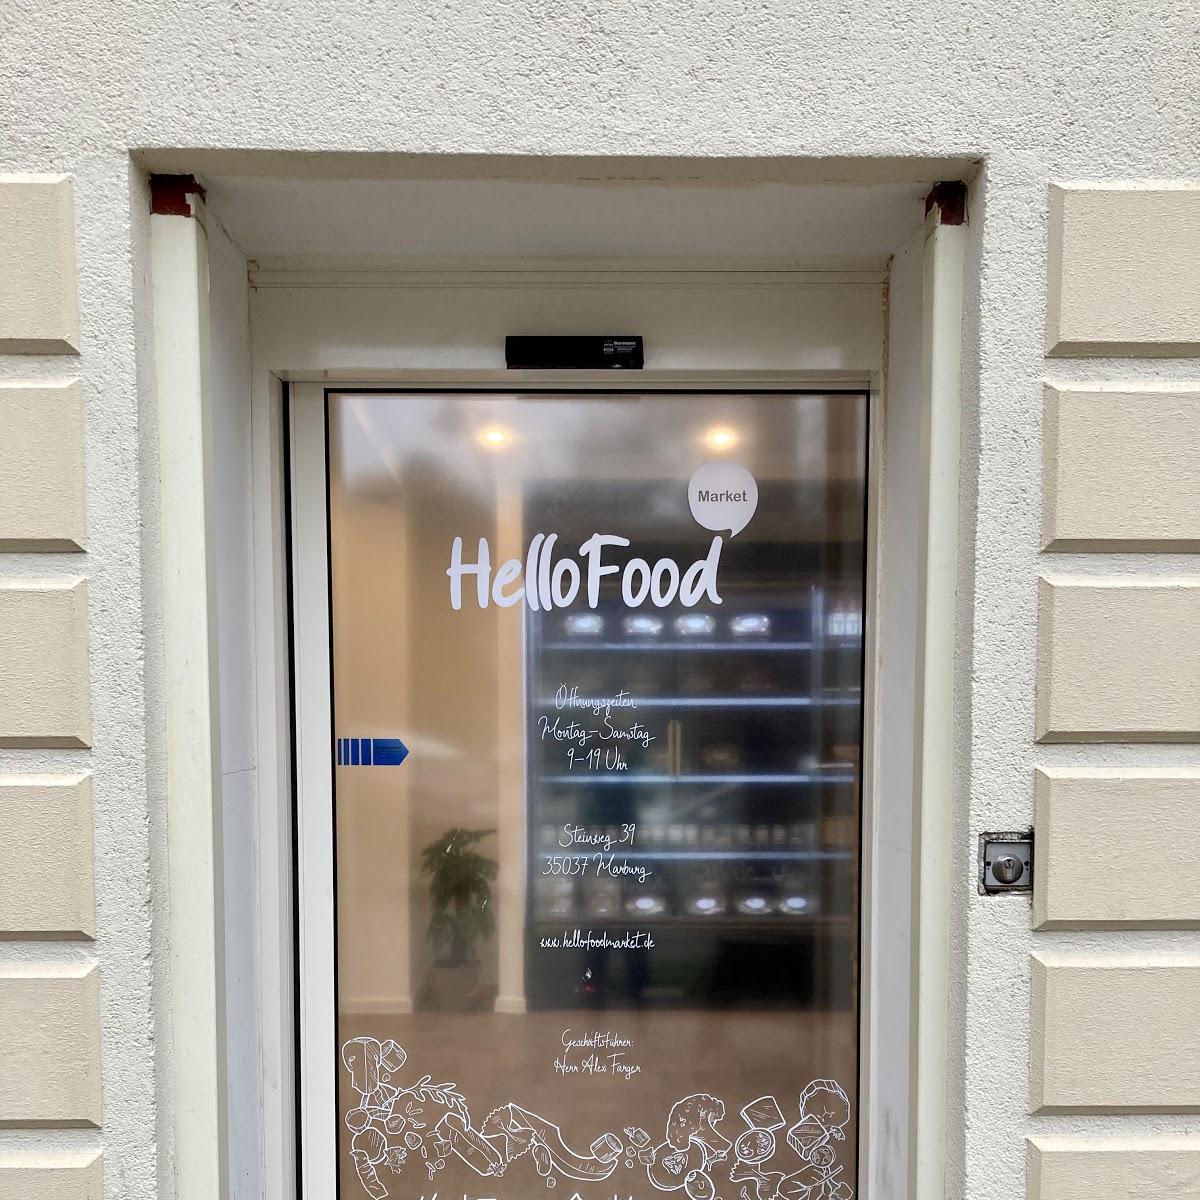 Restaurant "Hello Food" in Marburg